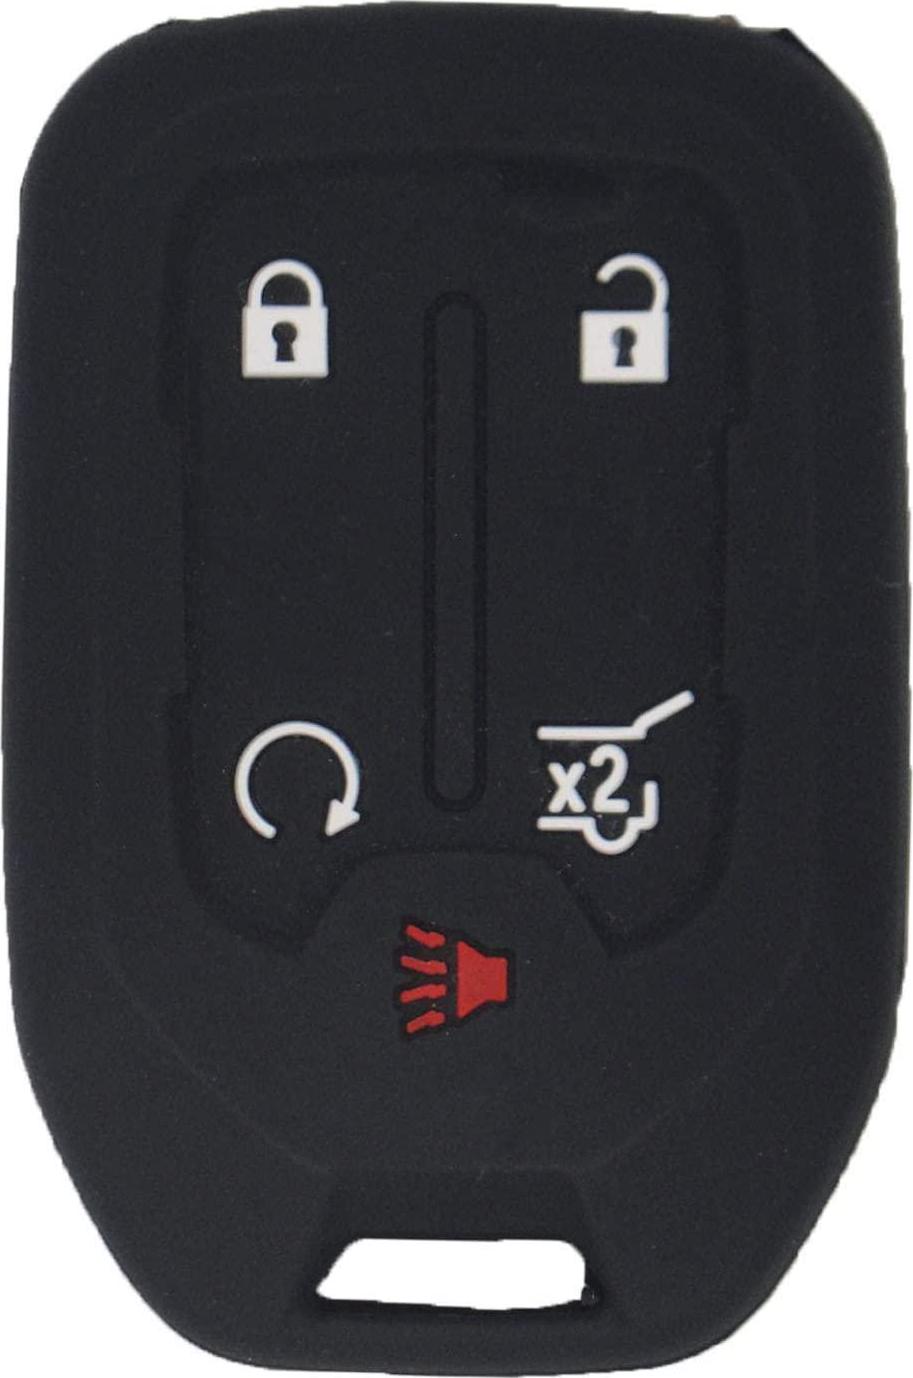 LemSa, LemSa 2pcs Silicone 5 Buttons Smart Key Fob Cover Remote Keyless Entry Bag Compatible with GMC Acadia Terrain Yukon Chevrolet Suburban Tahoe, Black Blue